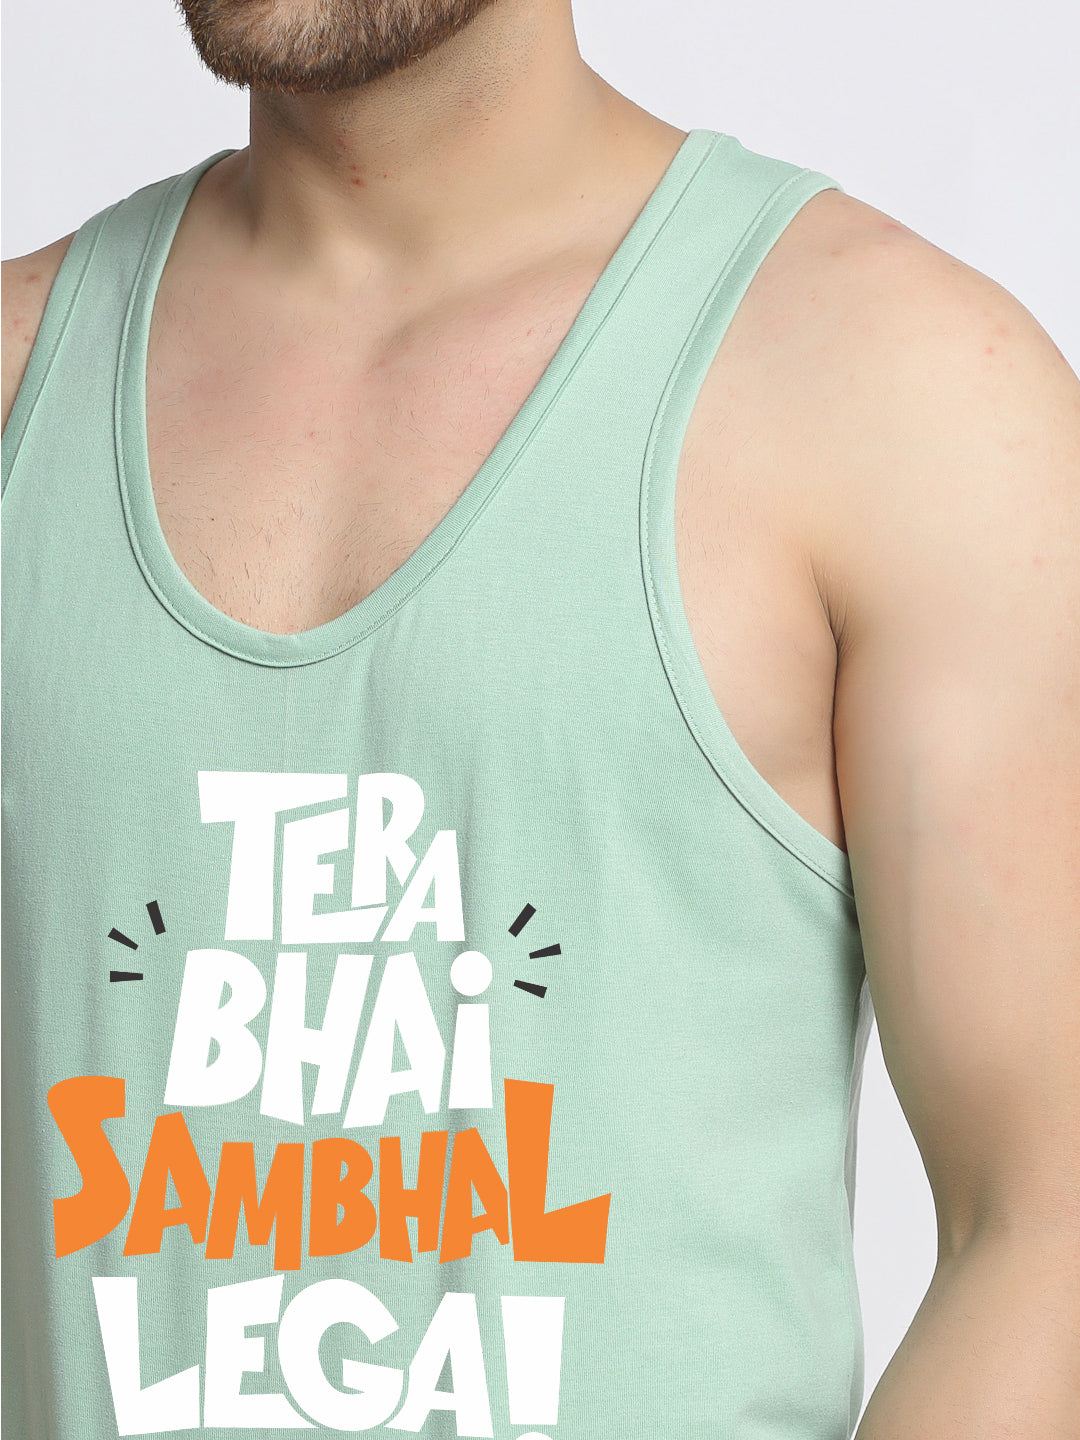 Tera Bhai Sambhal Lega Printed Innerwear Gym Vest - Friskers